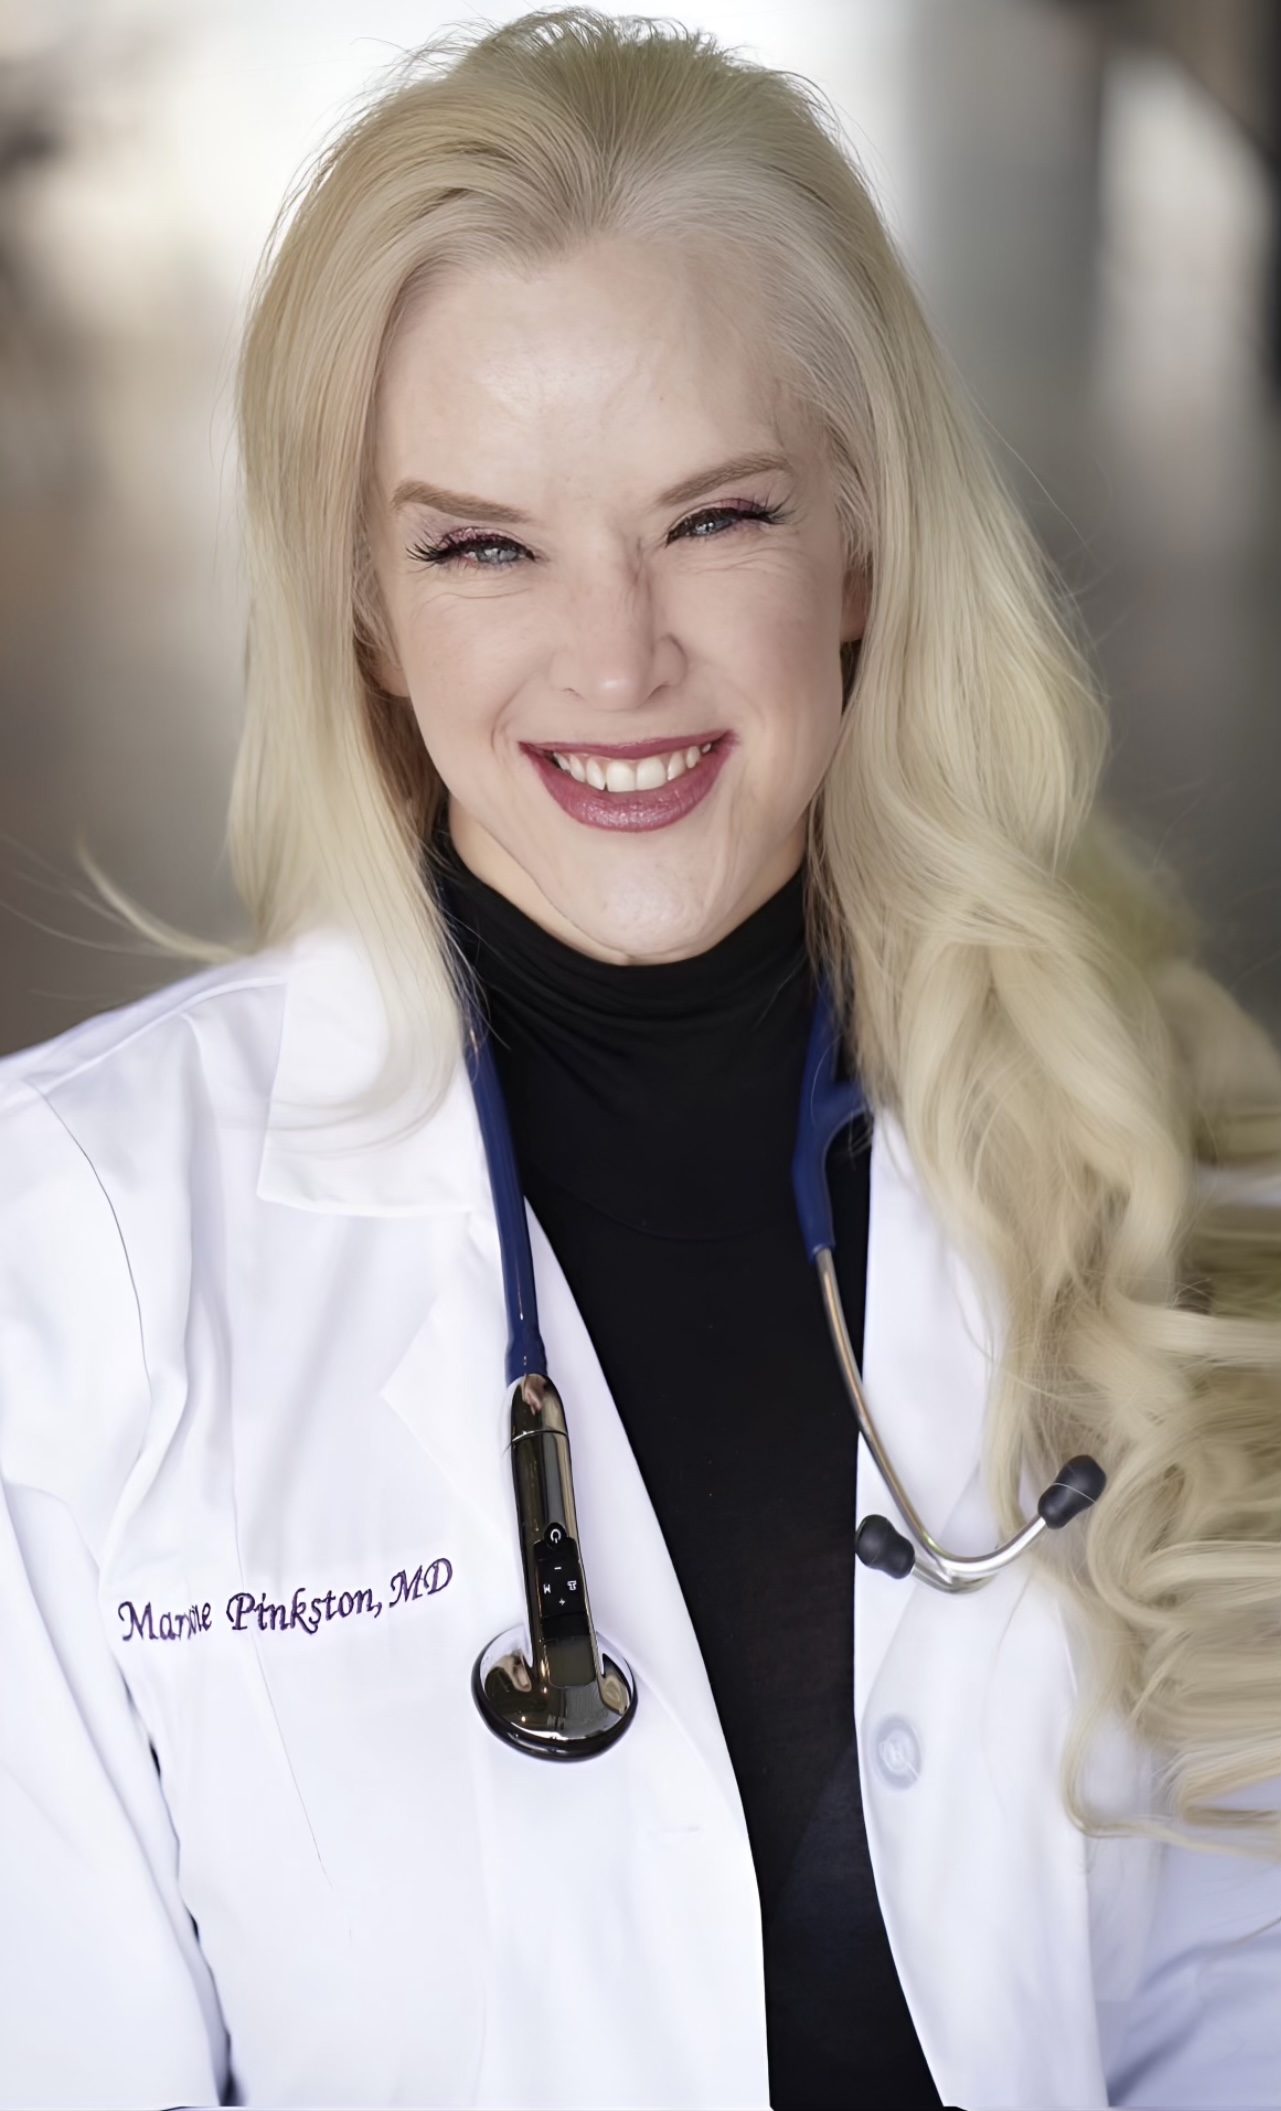 Dr Marianne Pinkston MD